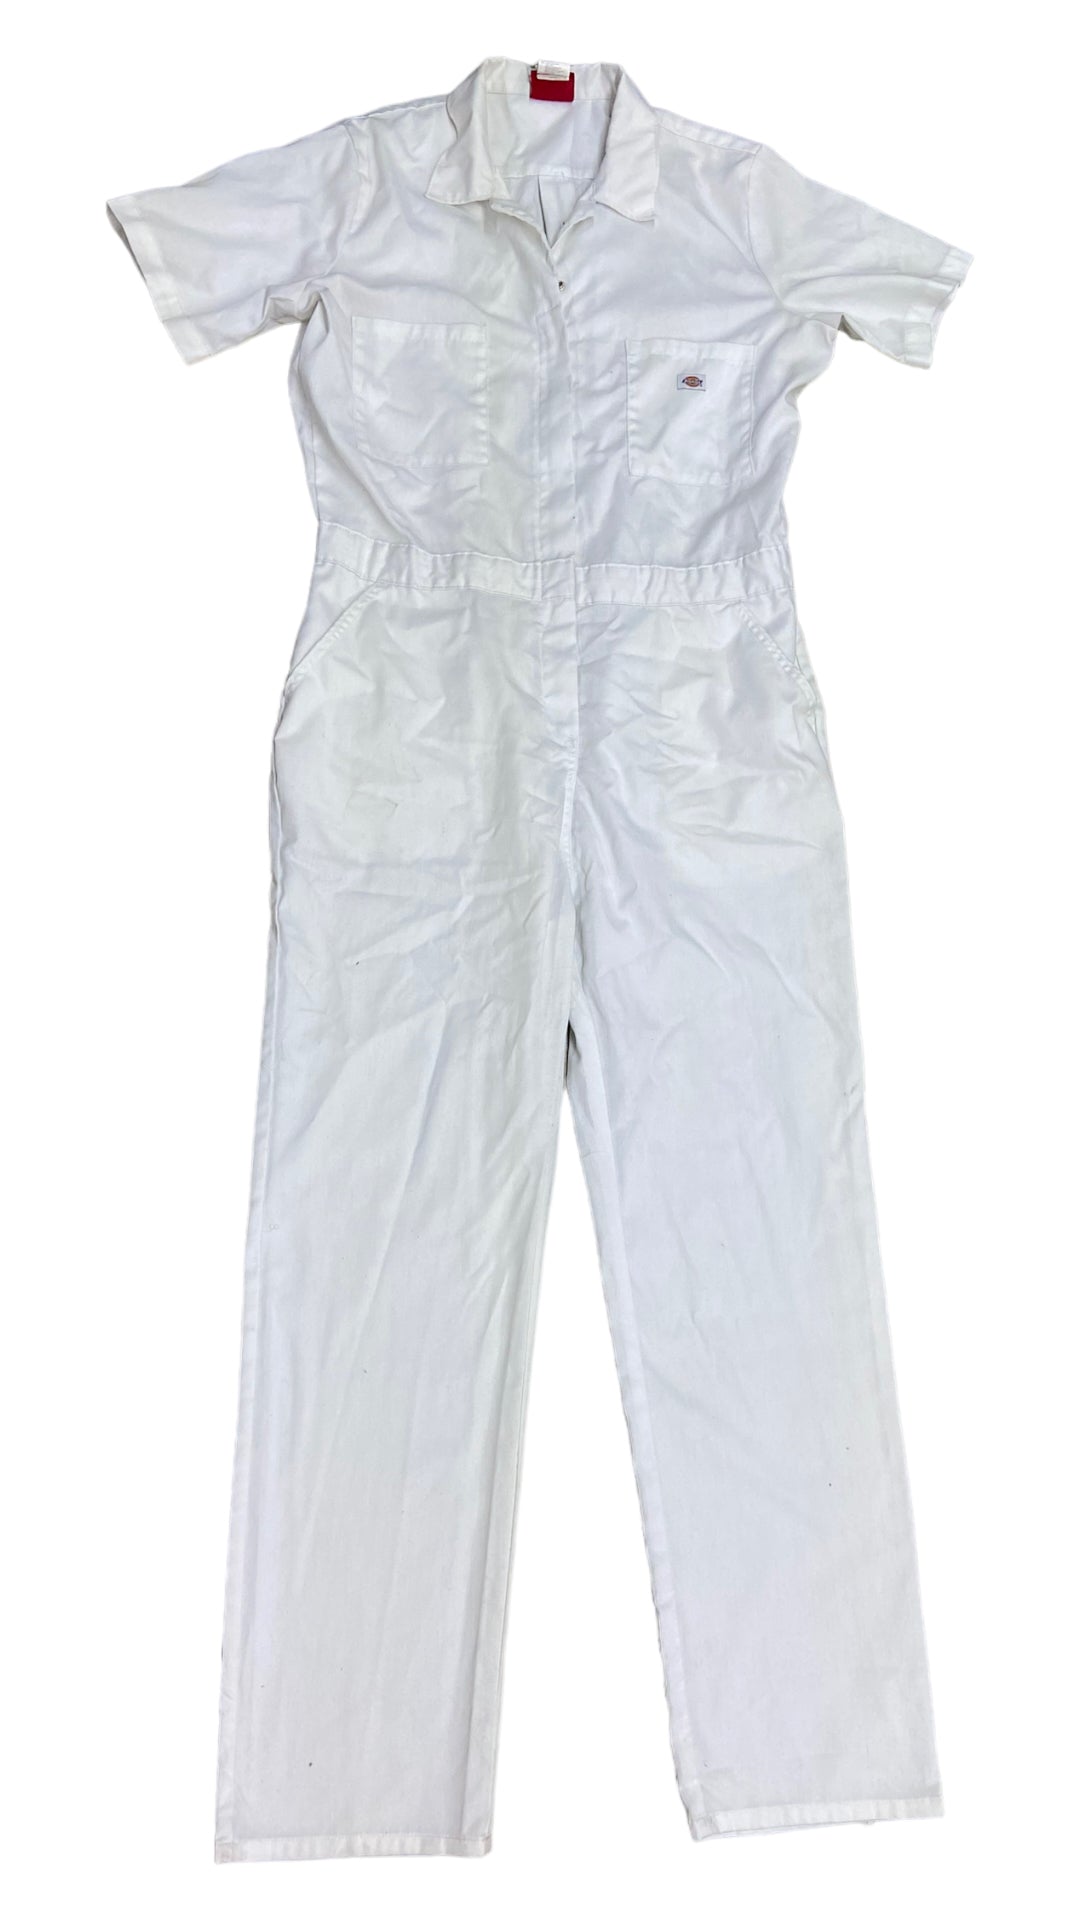 VTG Dickies White Coveralls Jumpsuit Sz XL